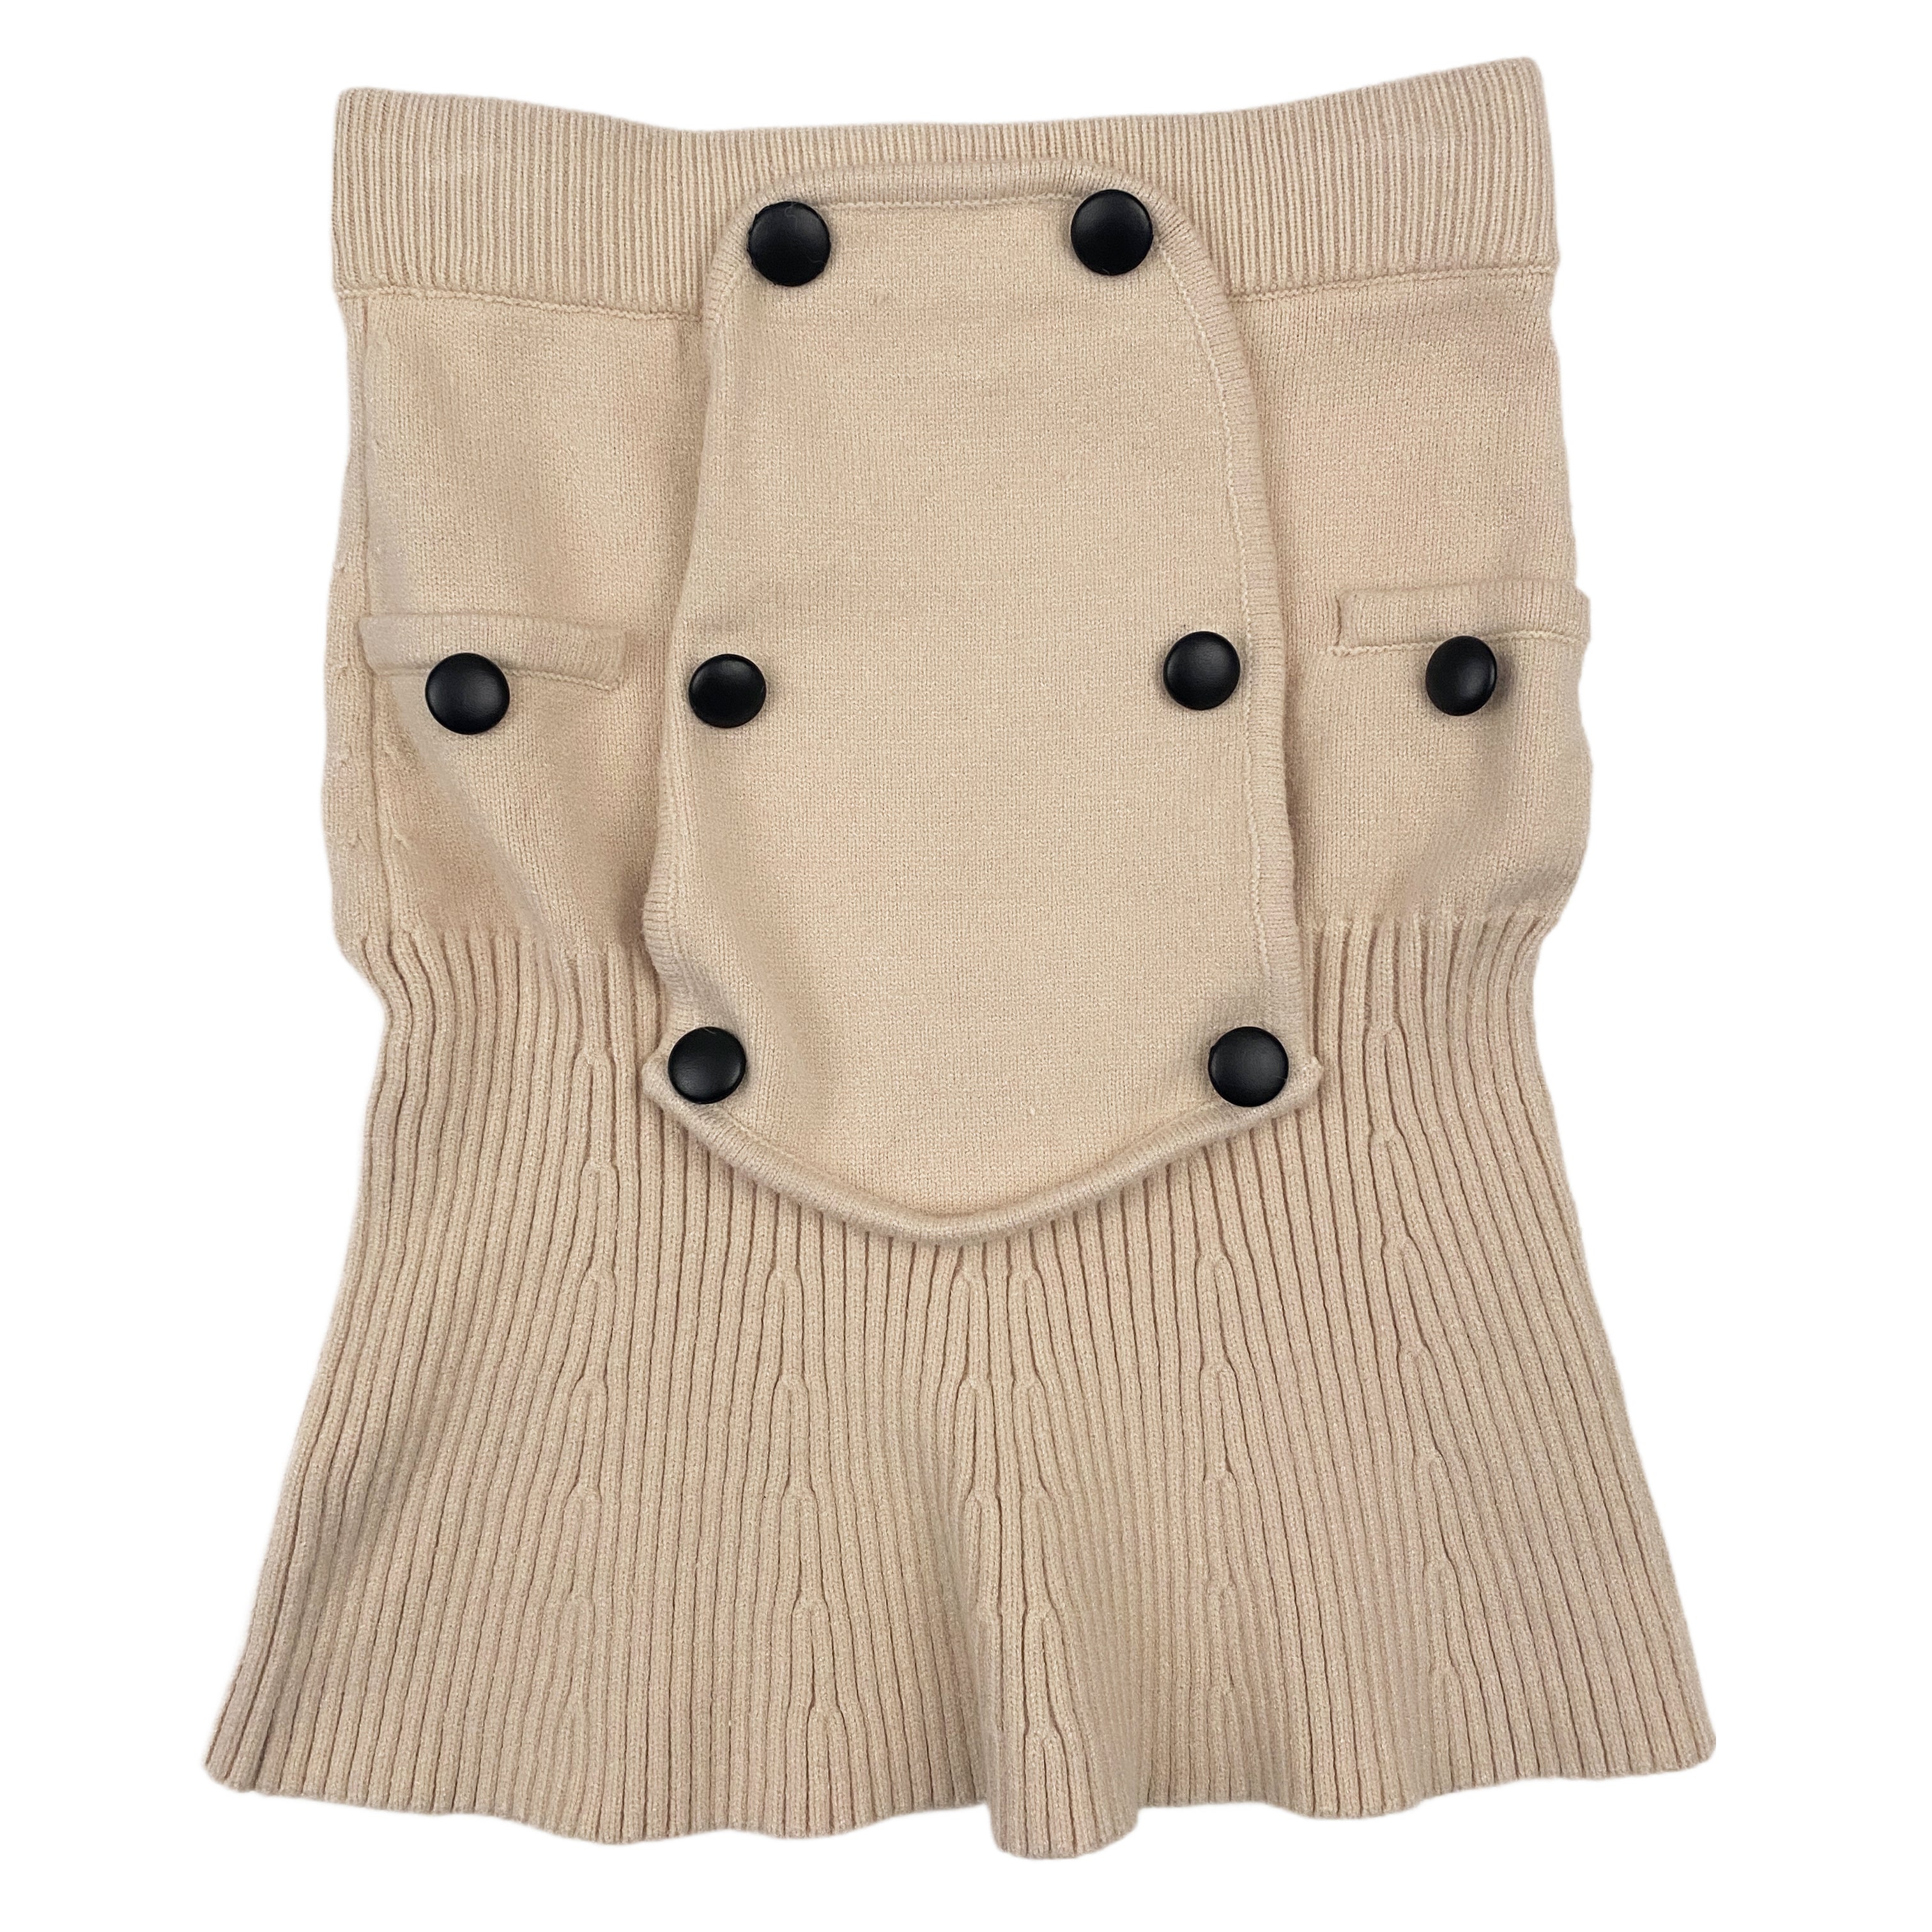 Creamy Knit Mini Skirt (S)